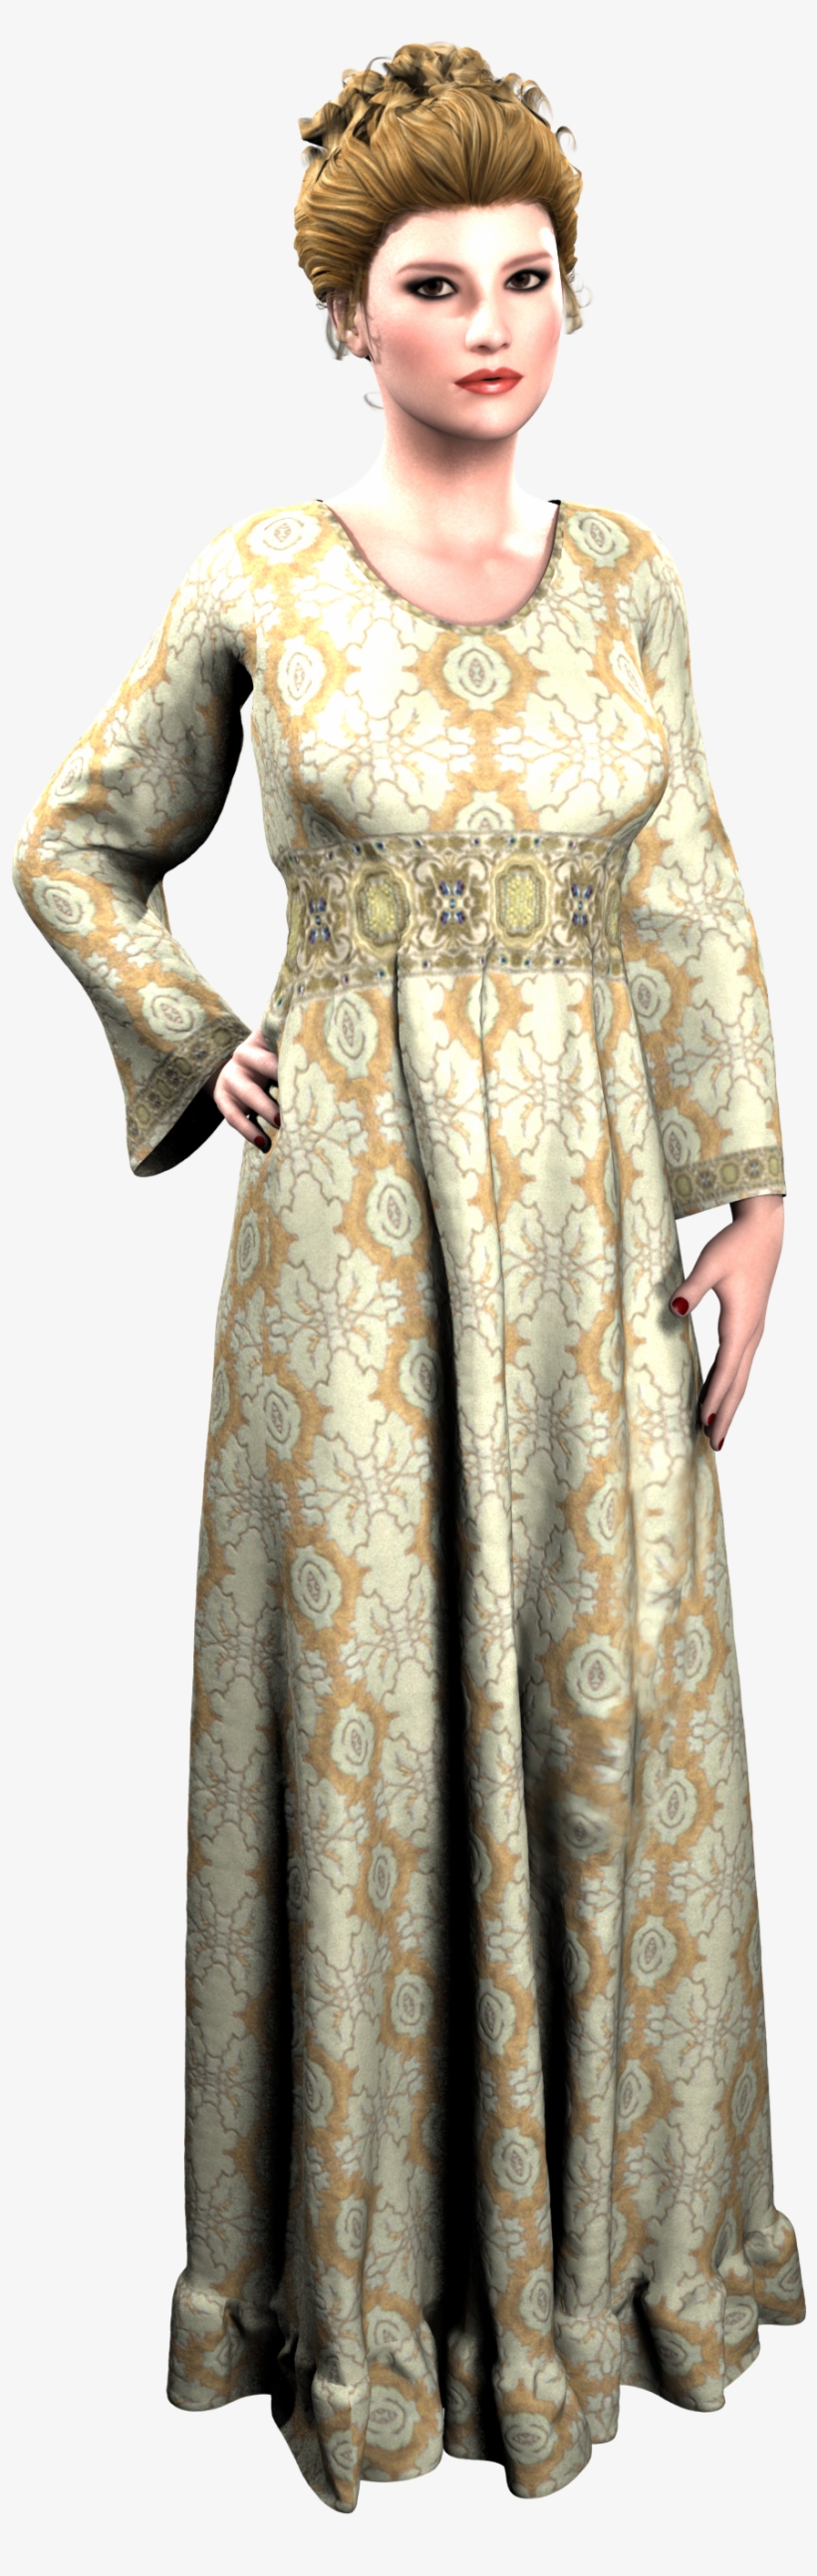 Vintage Woman Gown Old Romantic 977158 - Costume, transparent png #2781922